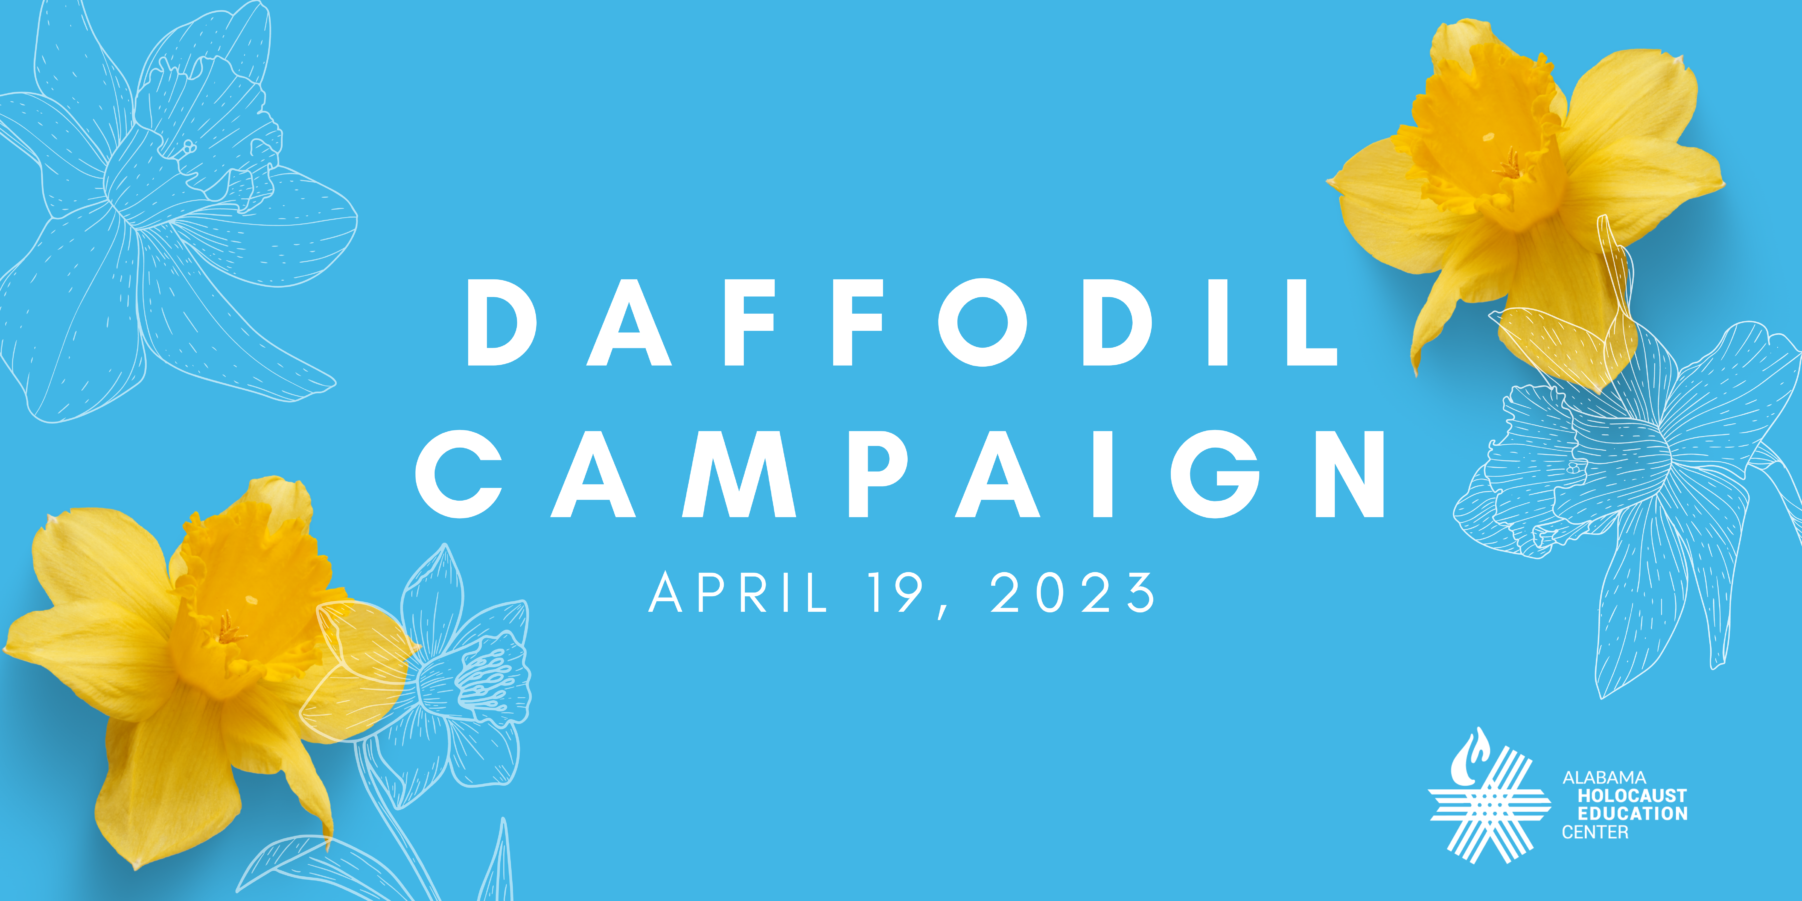 Daffodil Campaign Volunteer Form - Alabama Holocaust Education Center